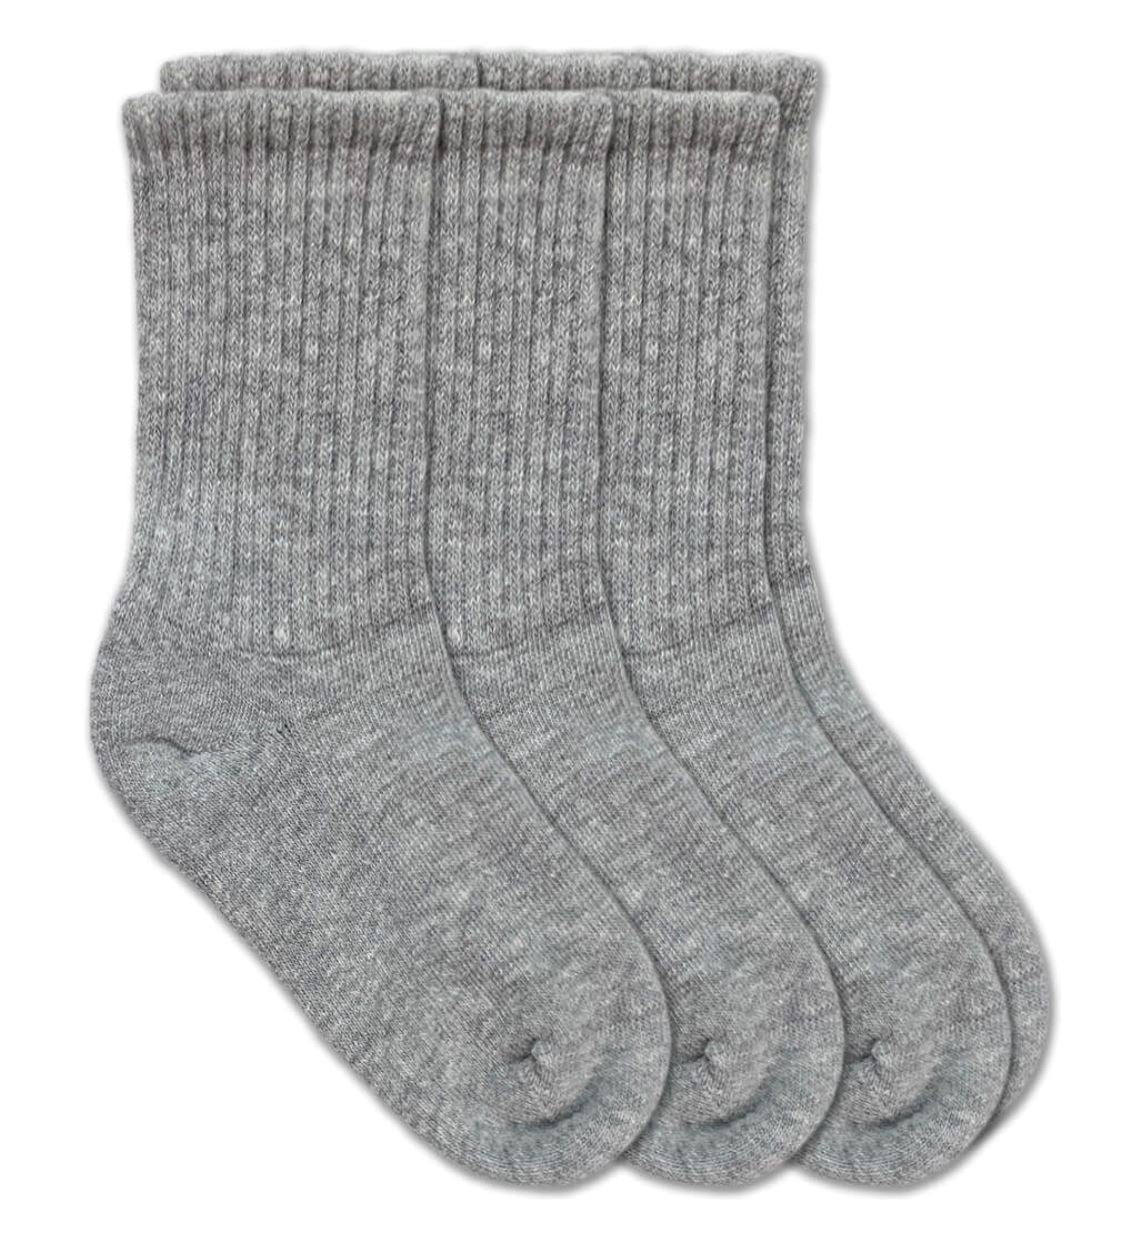 Grey Smooth Toe Crew Socks 3-pack 110 ACCESSORIES CHILD Jefferies Socks 6-11 